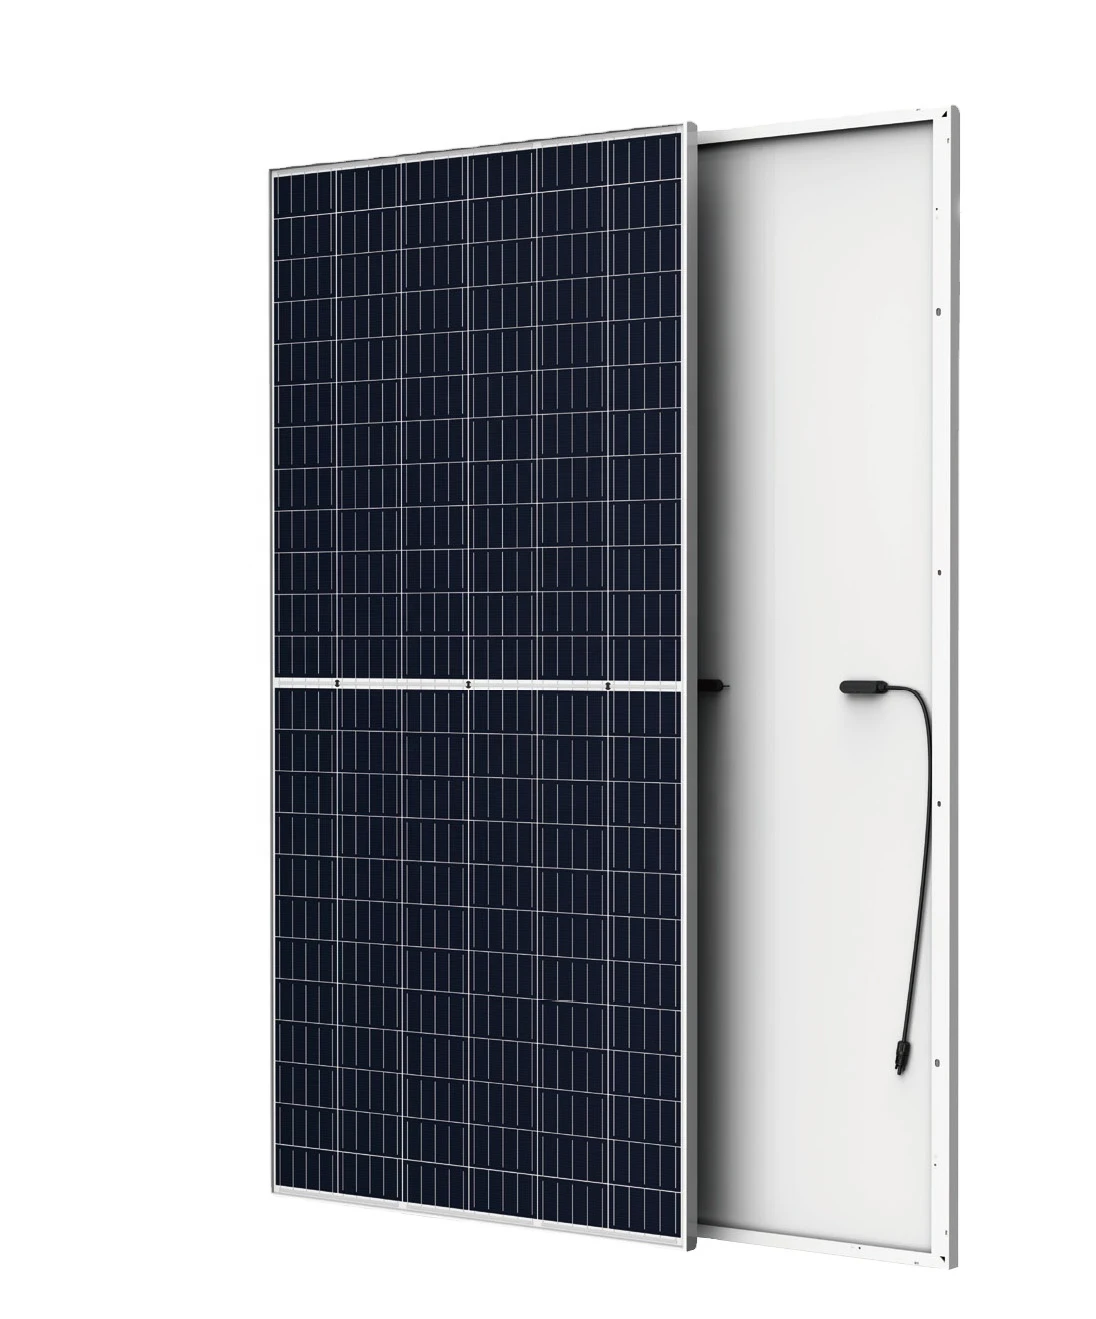 Hot selling solar panels 400w mono solar panel shenzhen 405w 410w 445w Power System Cells